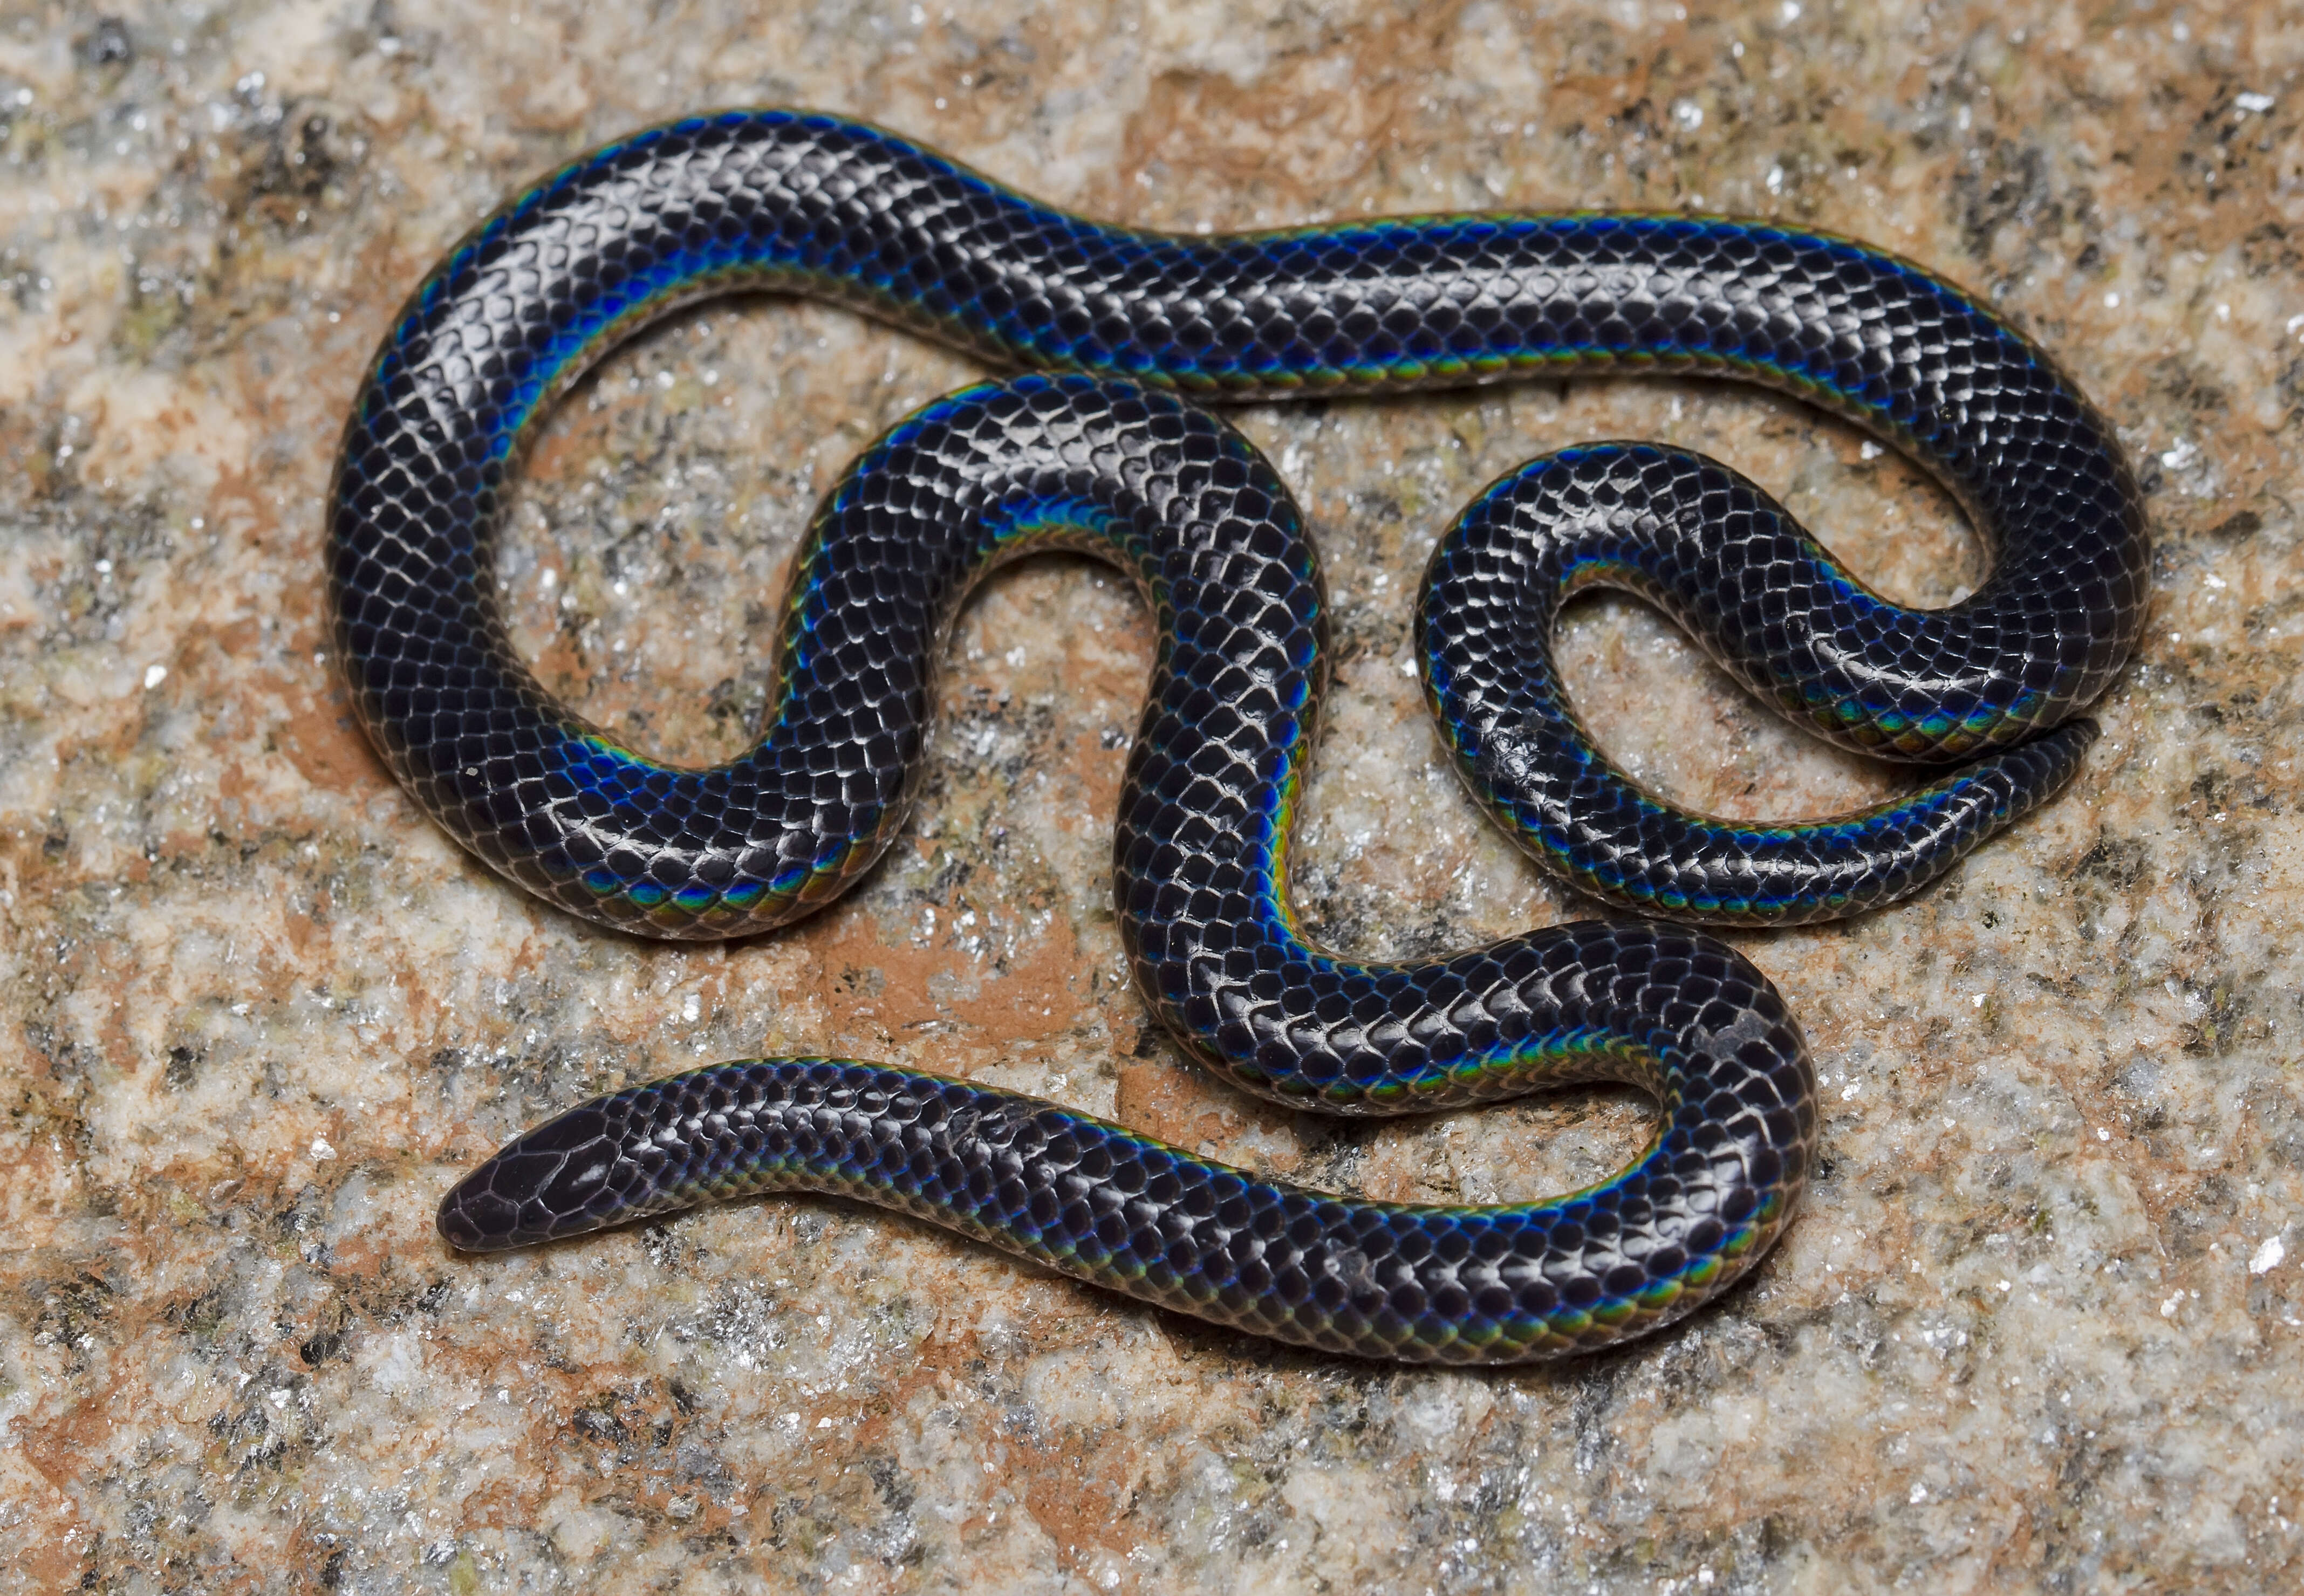 Image of Indian Black Earth Snake